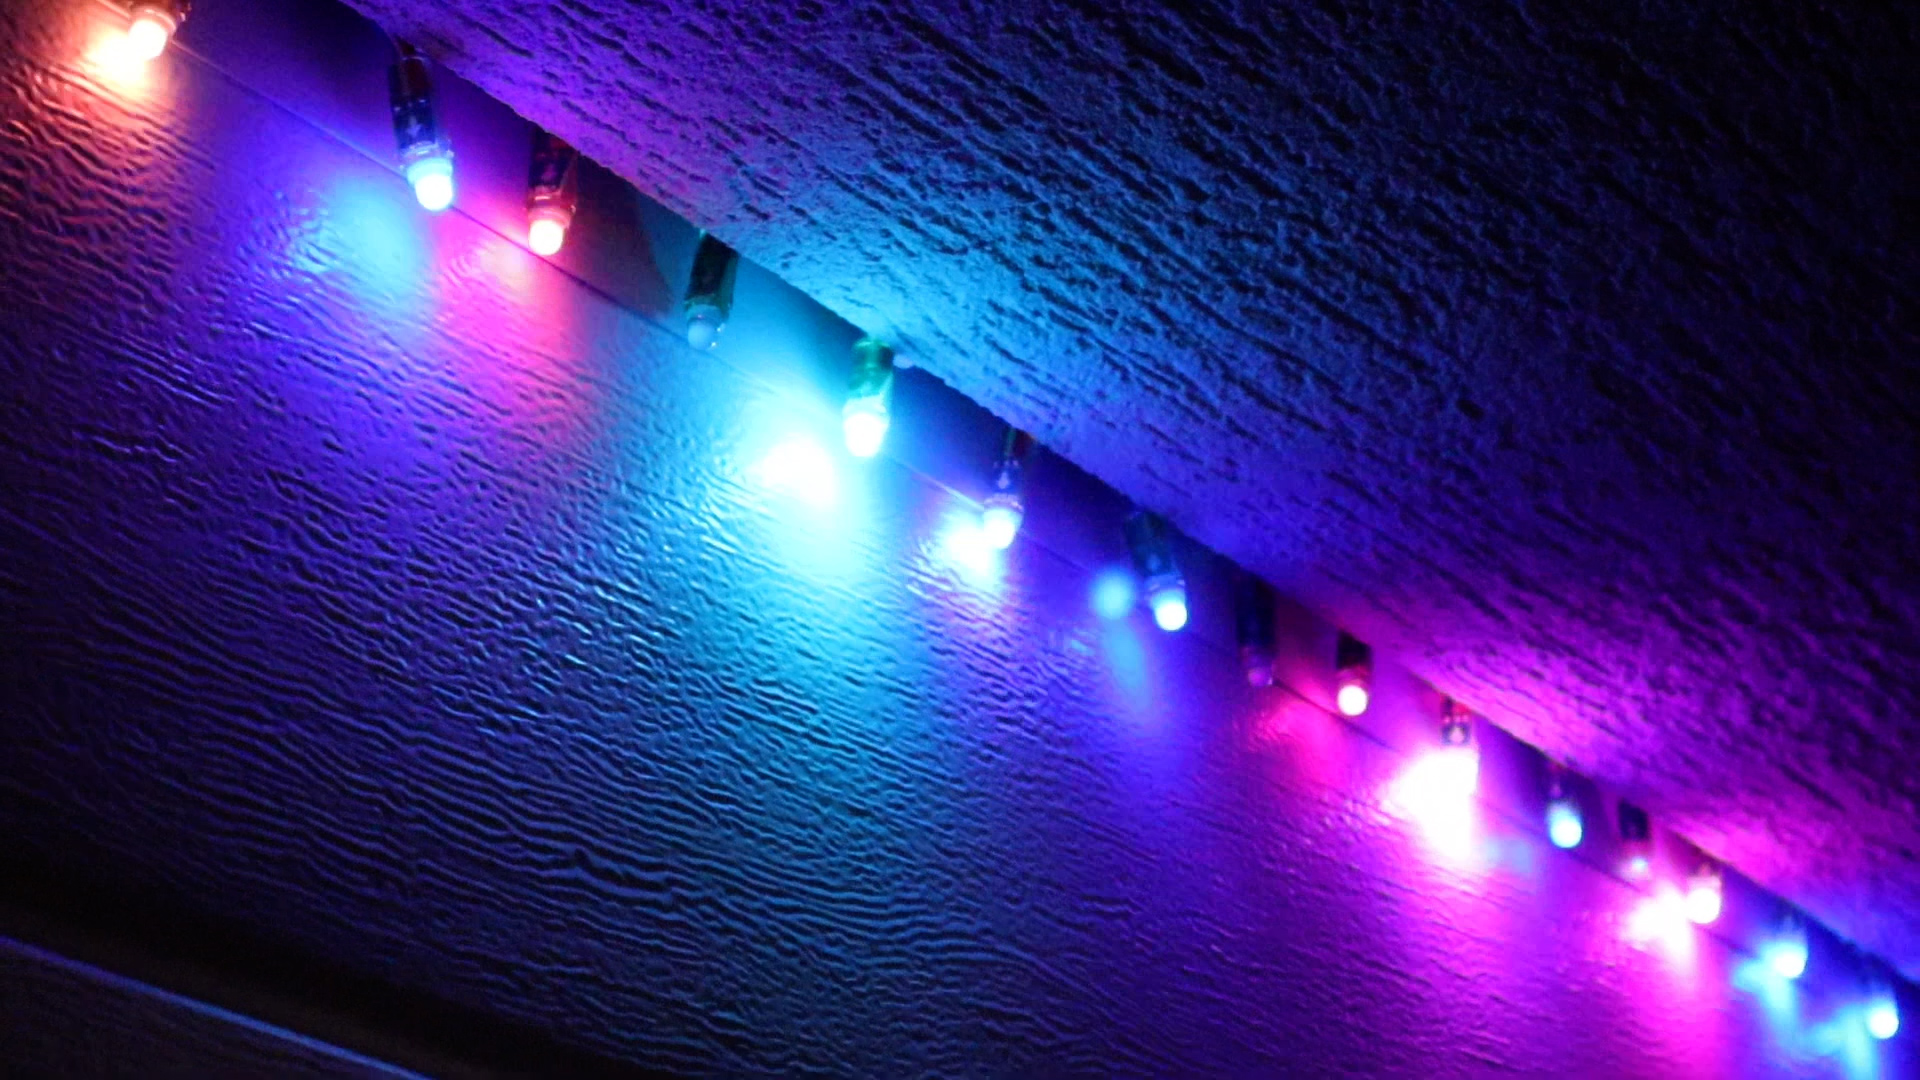 I made WLED Christmas lights for my garage door